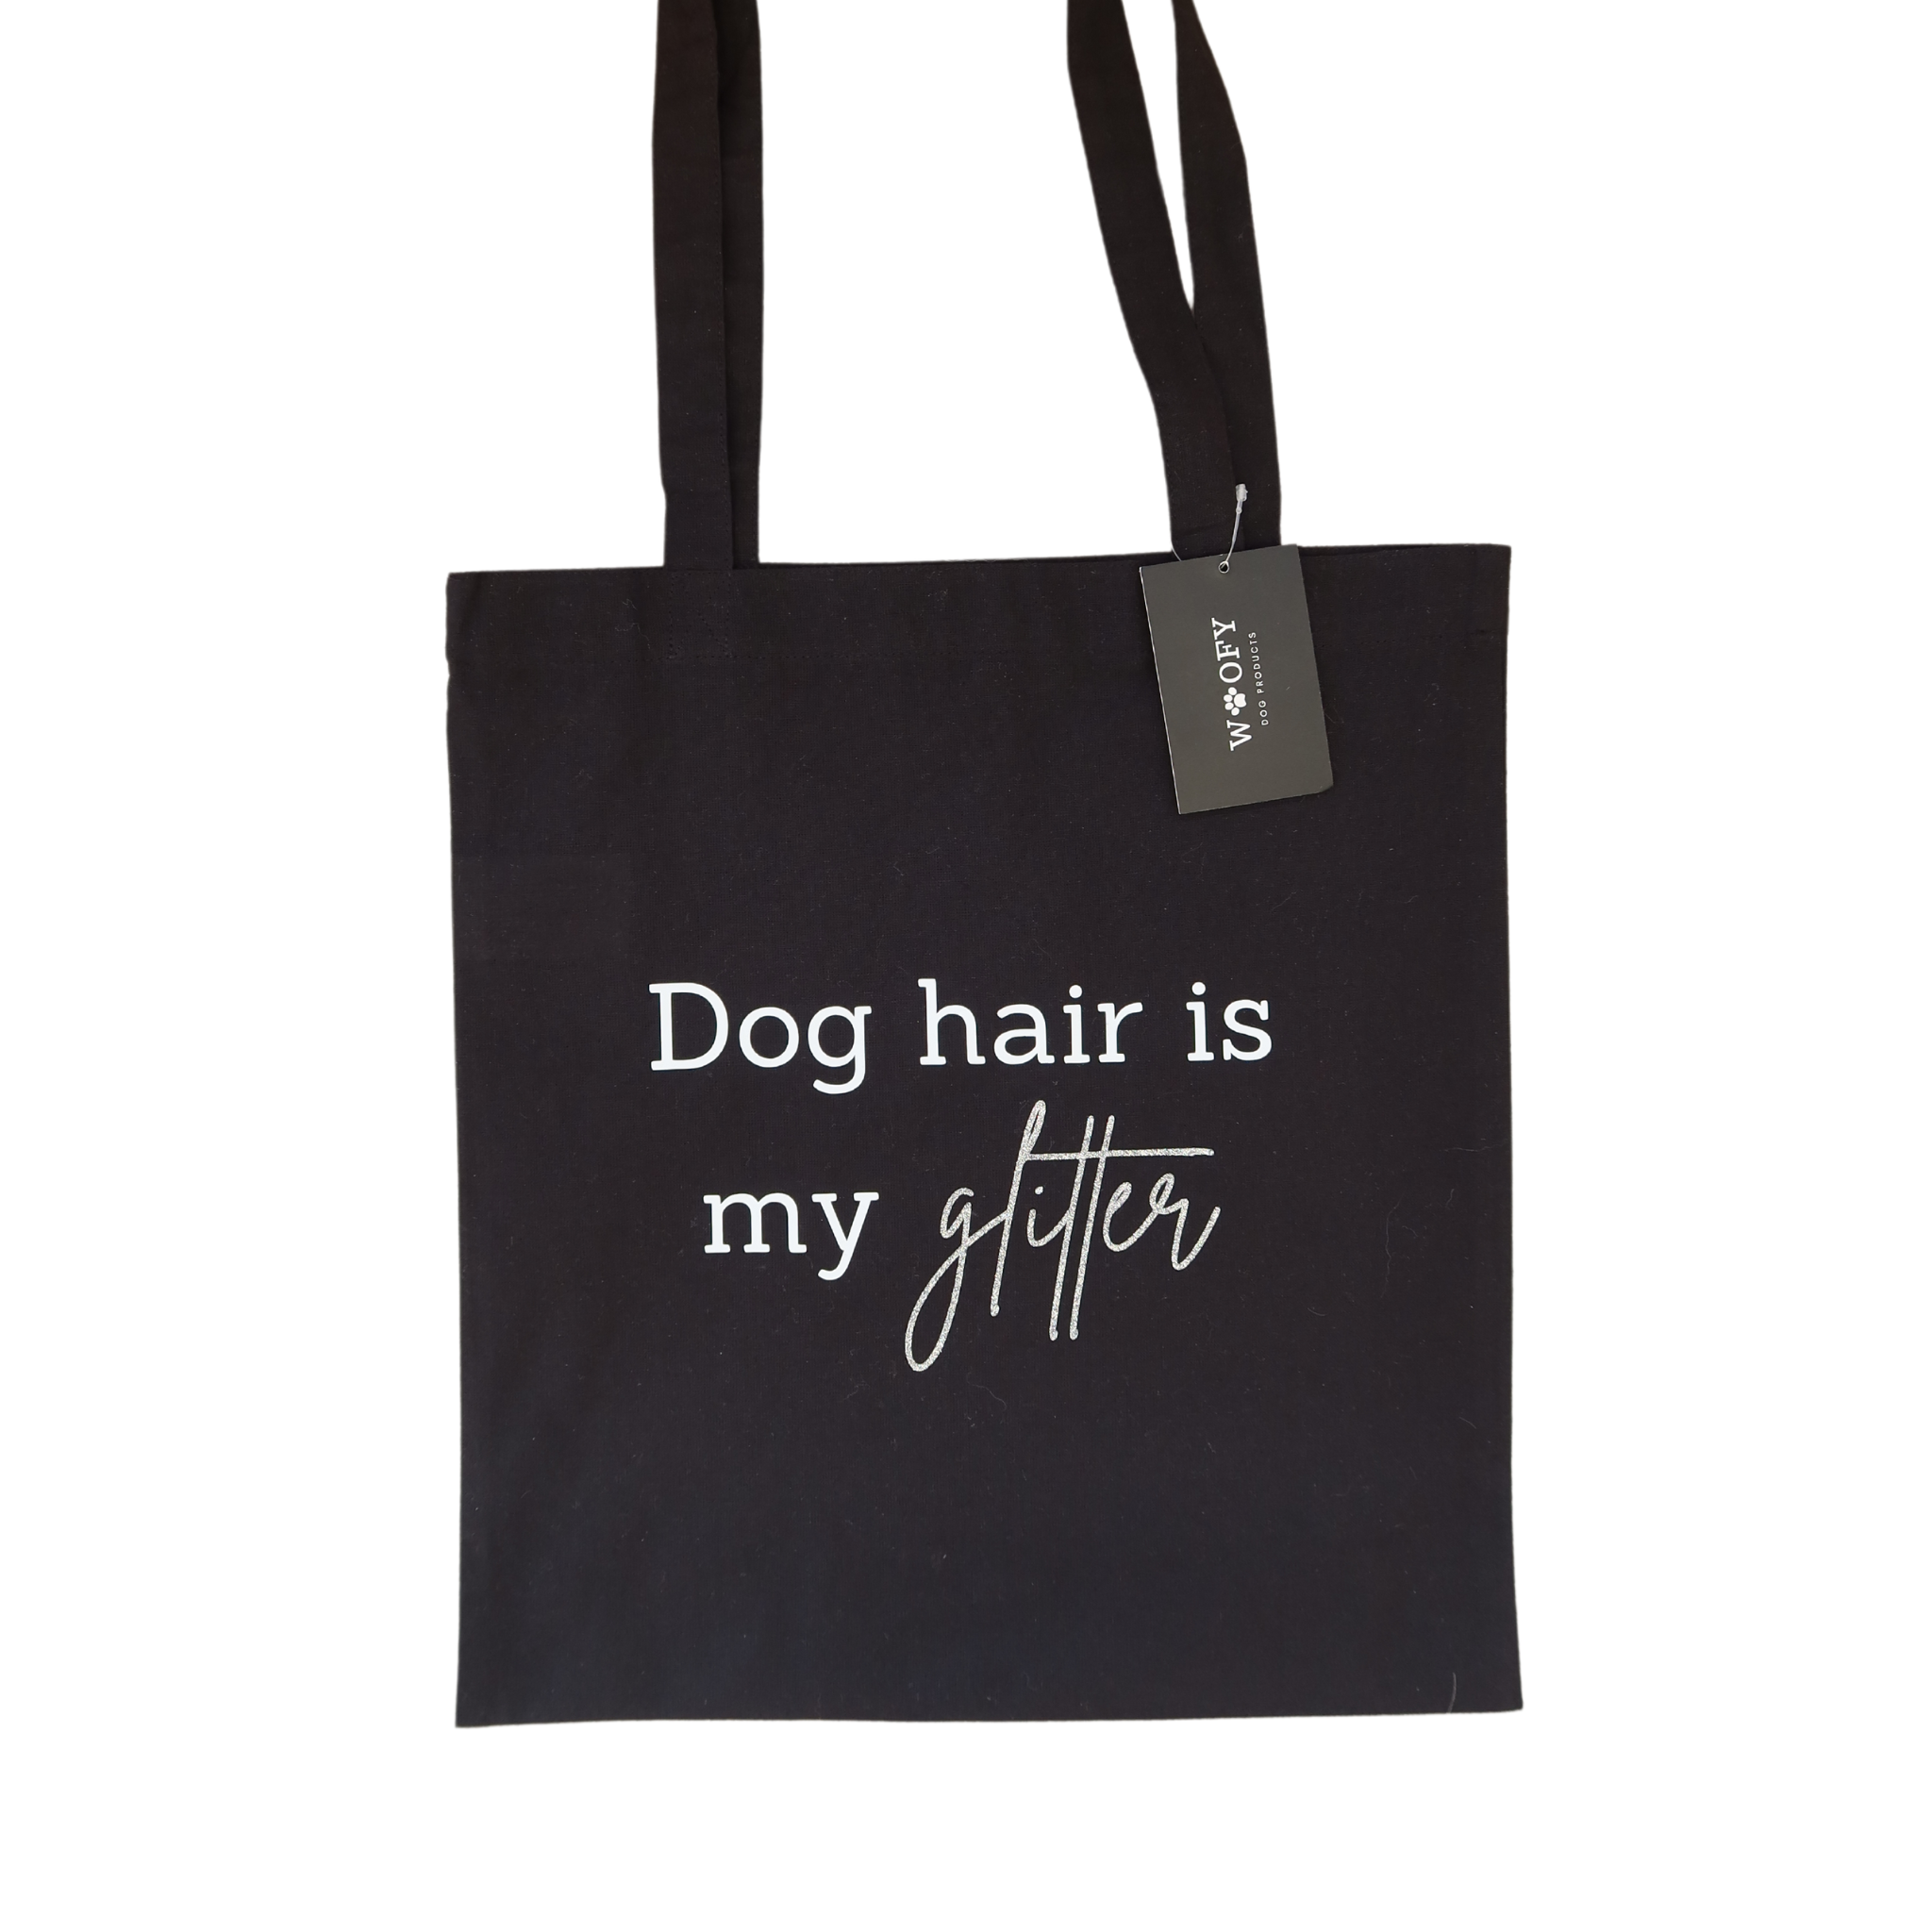 'Dog hair is my glitter' tote bag